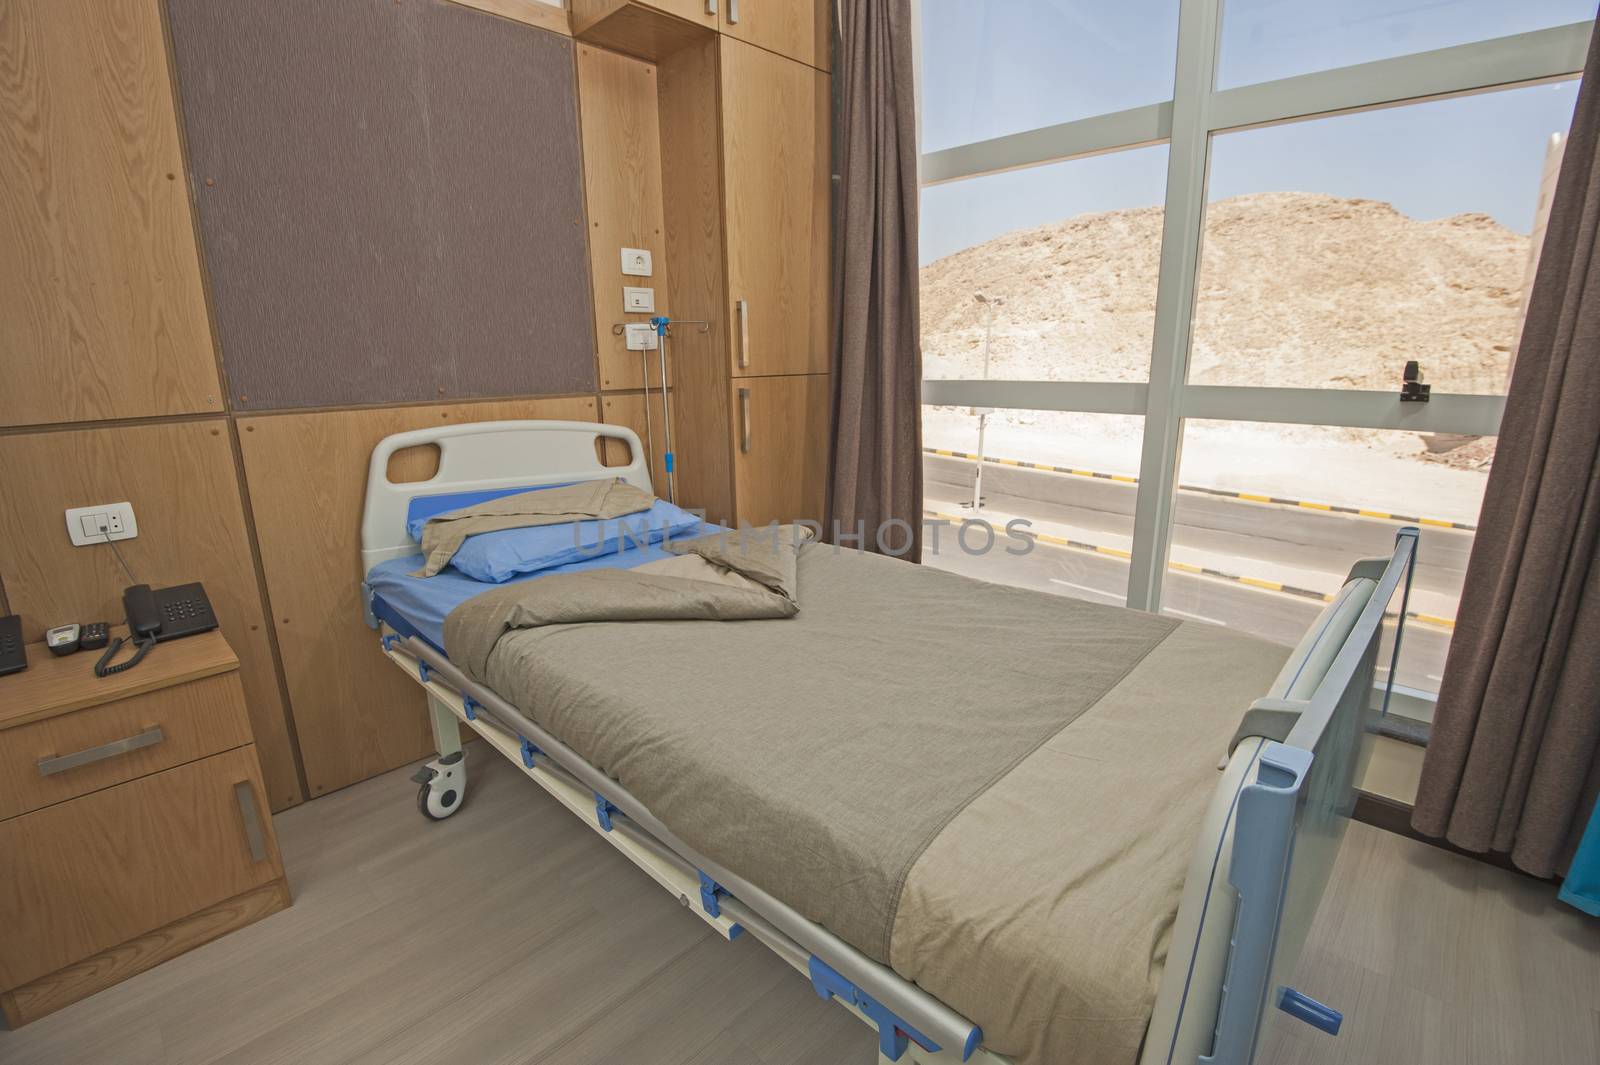 Bed in a hospital ward by paulvinten